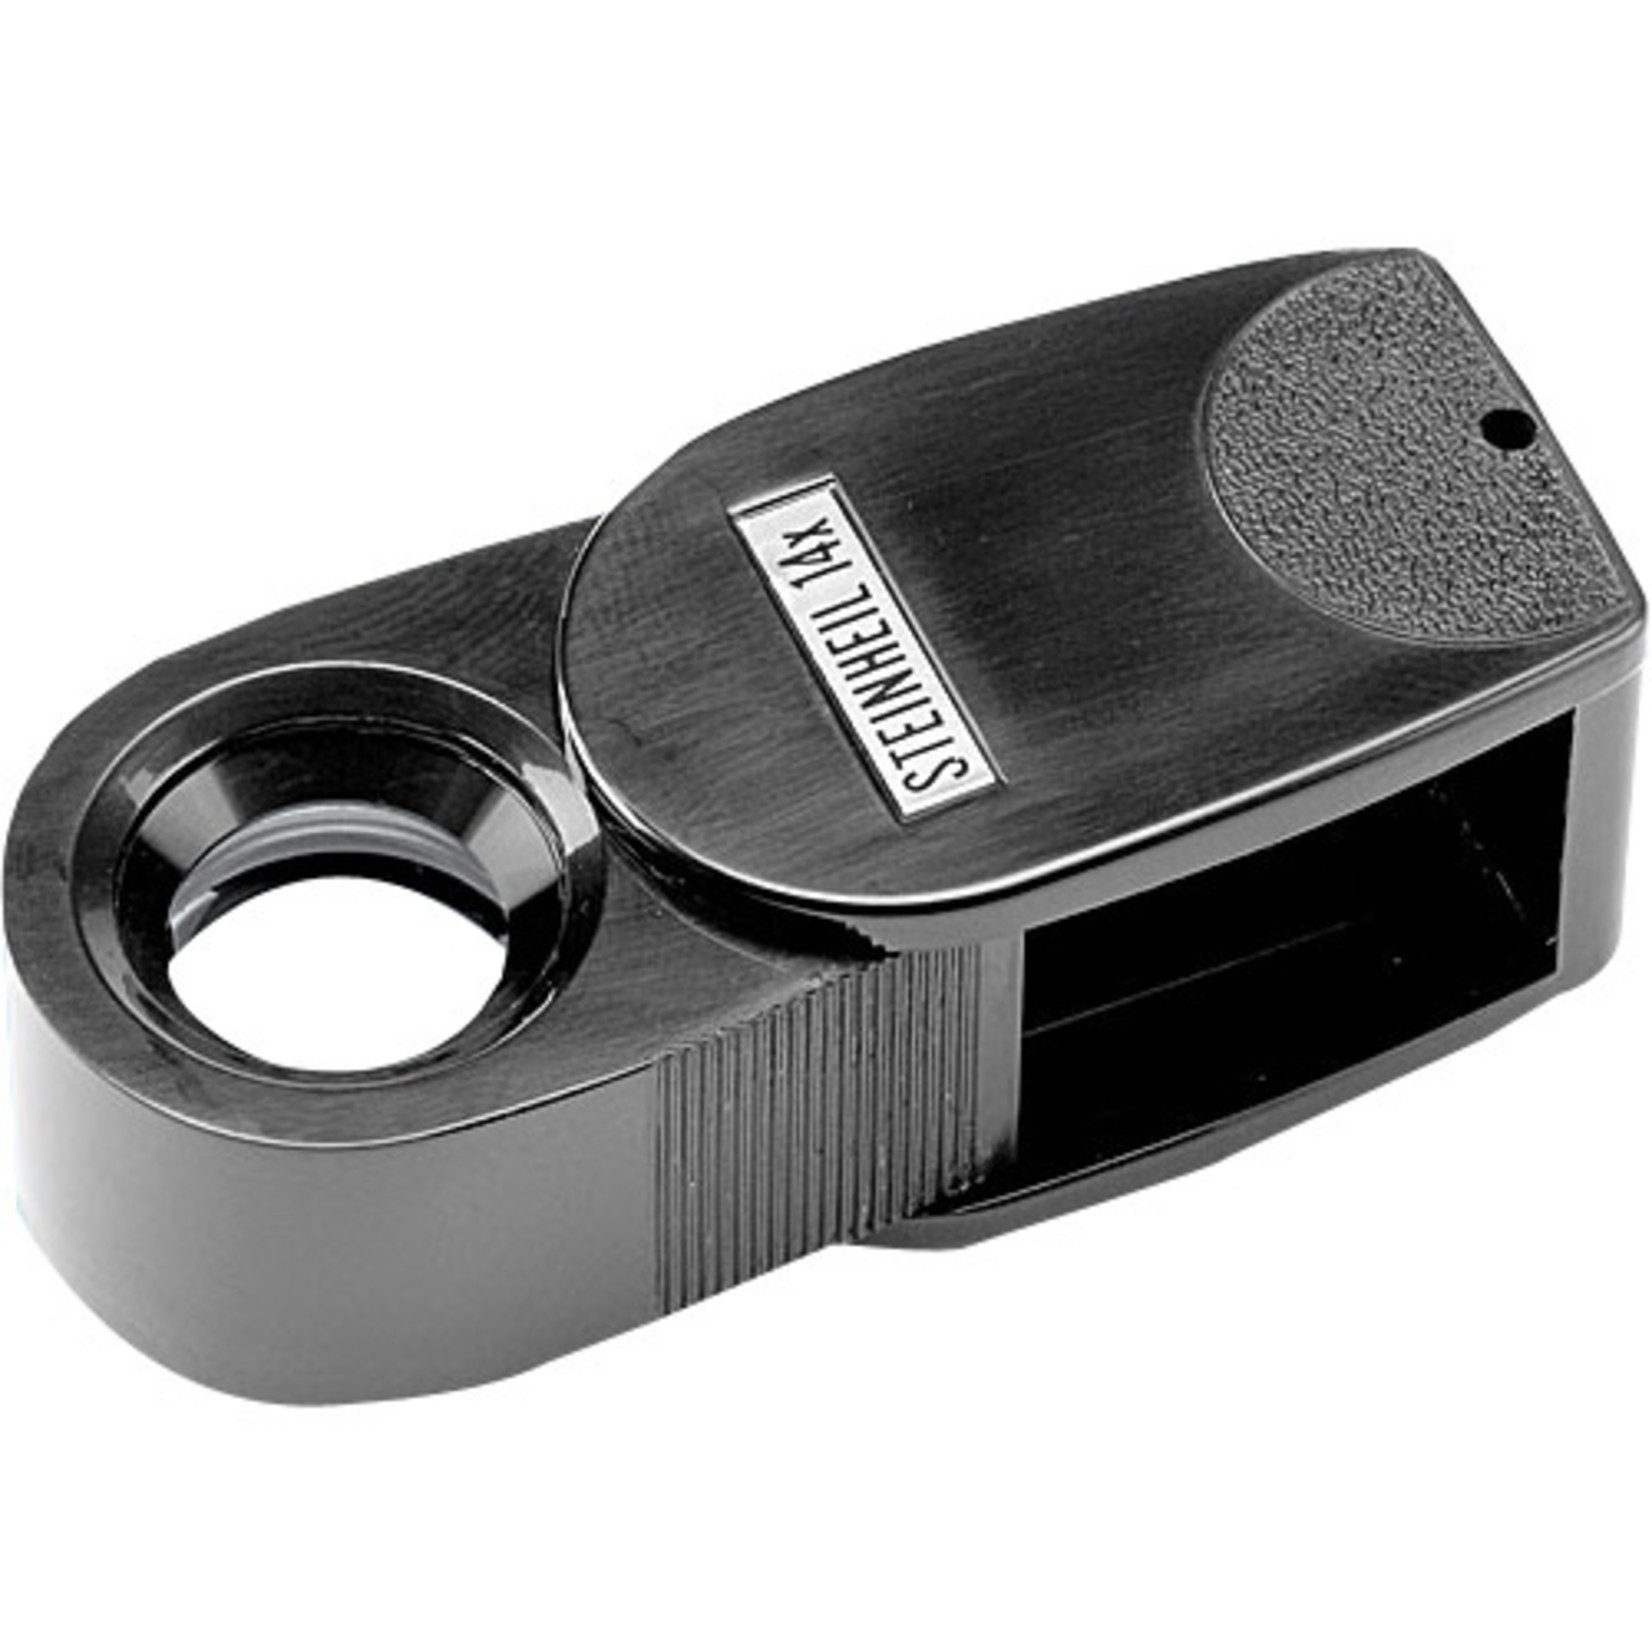 PEAK Steinheil Folding magnifiers